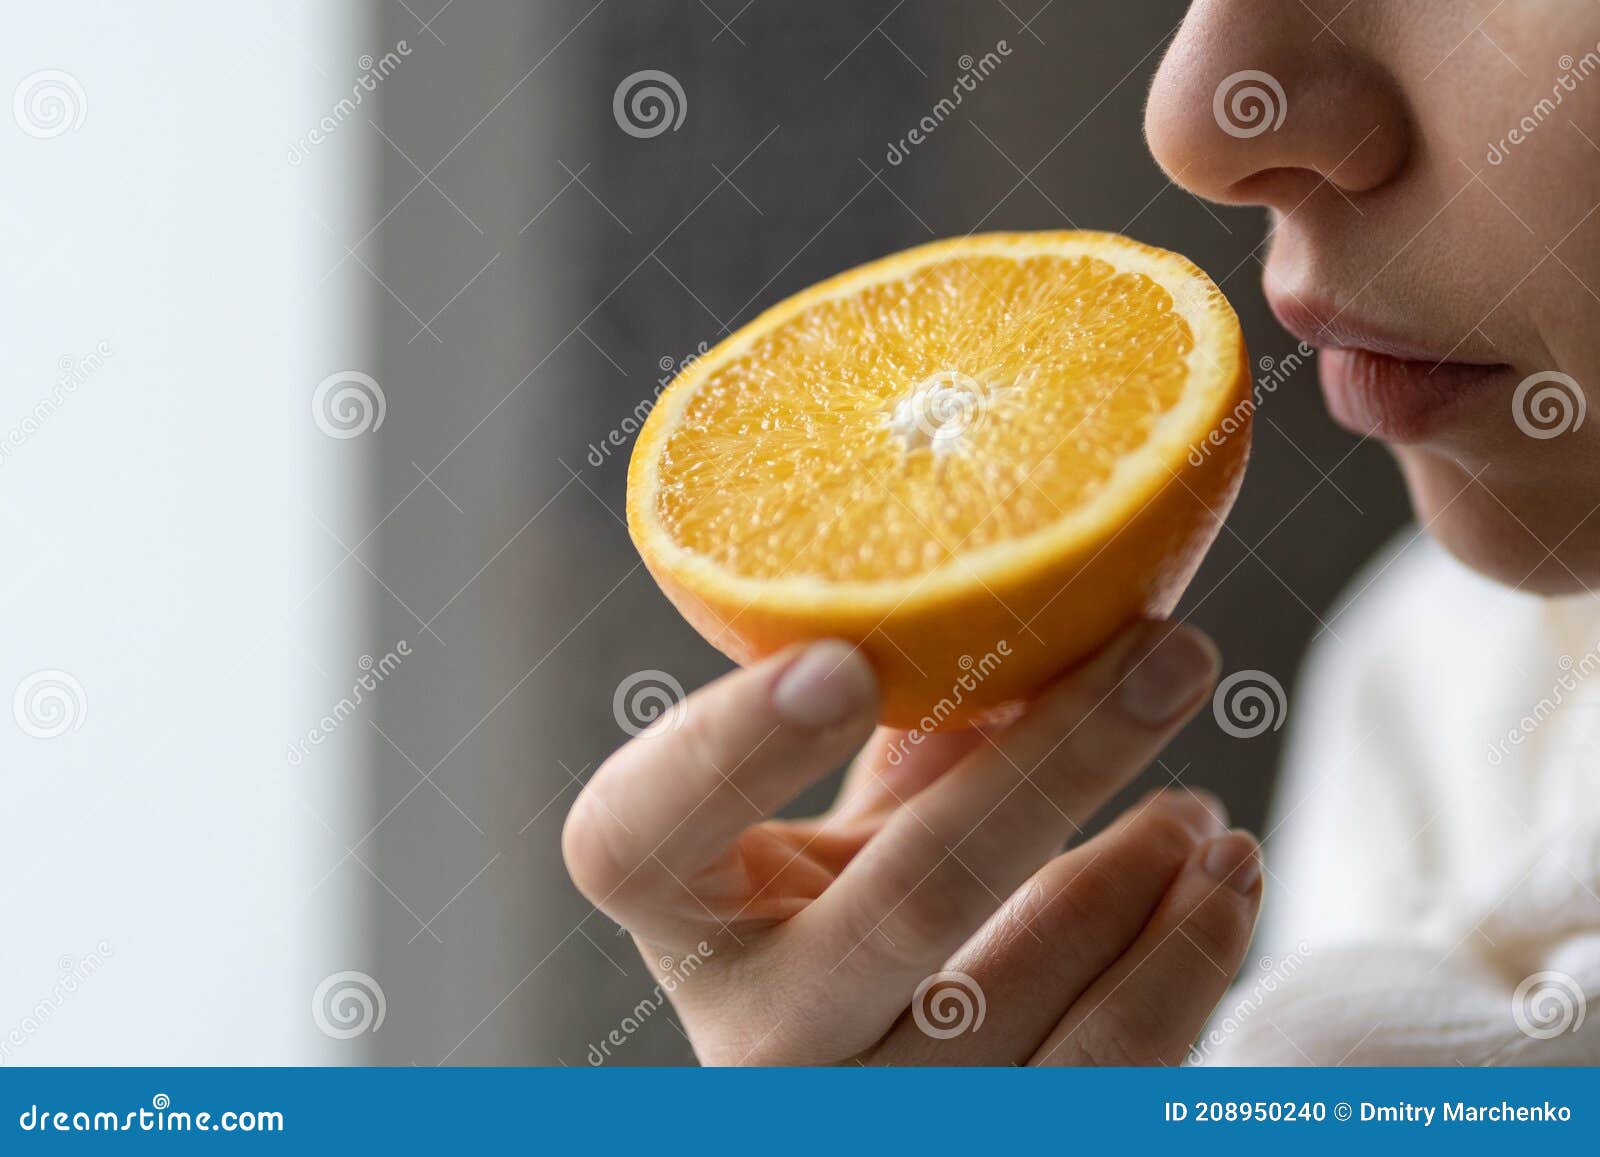 sick woman trying to sense smell of half fresh orange, has symptom of covid-19, loss of smell, taste